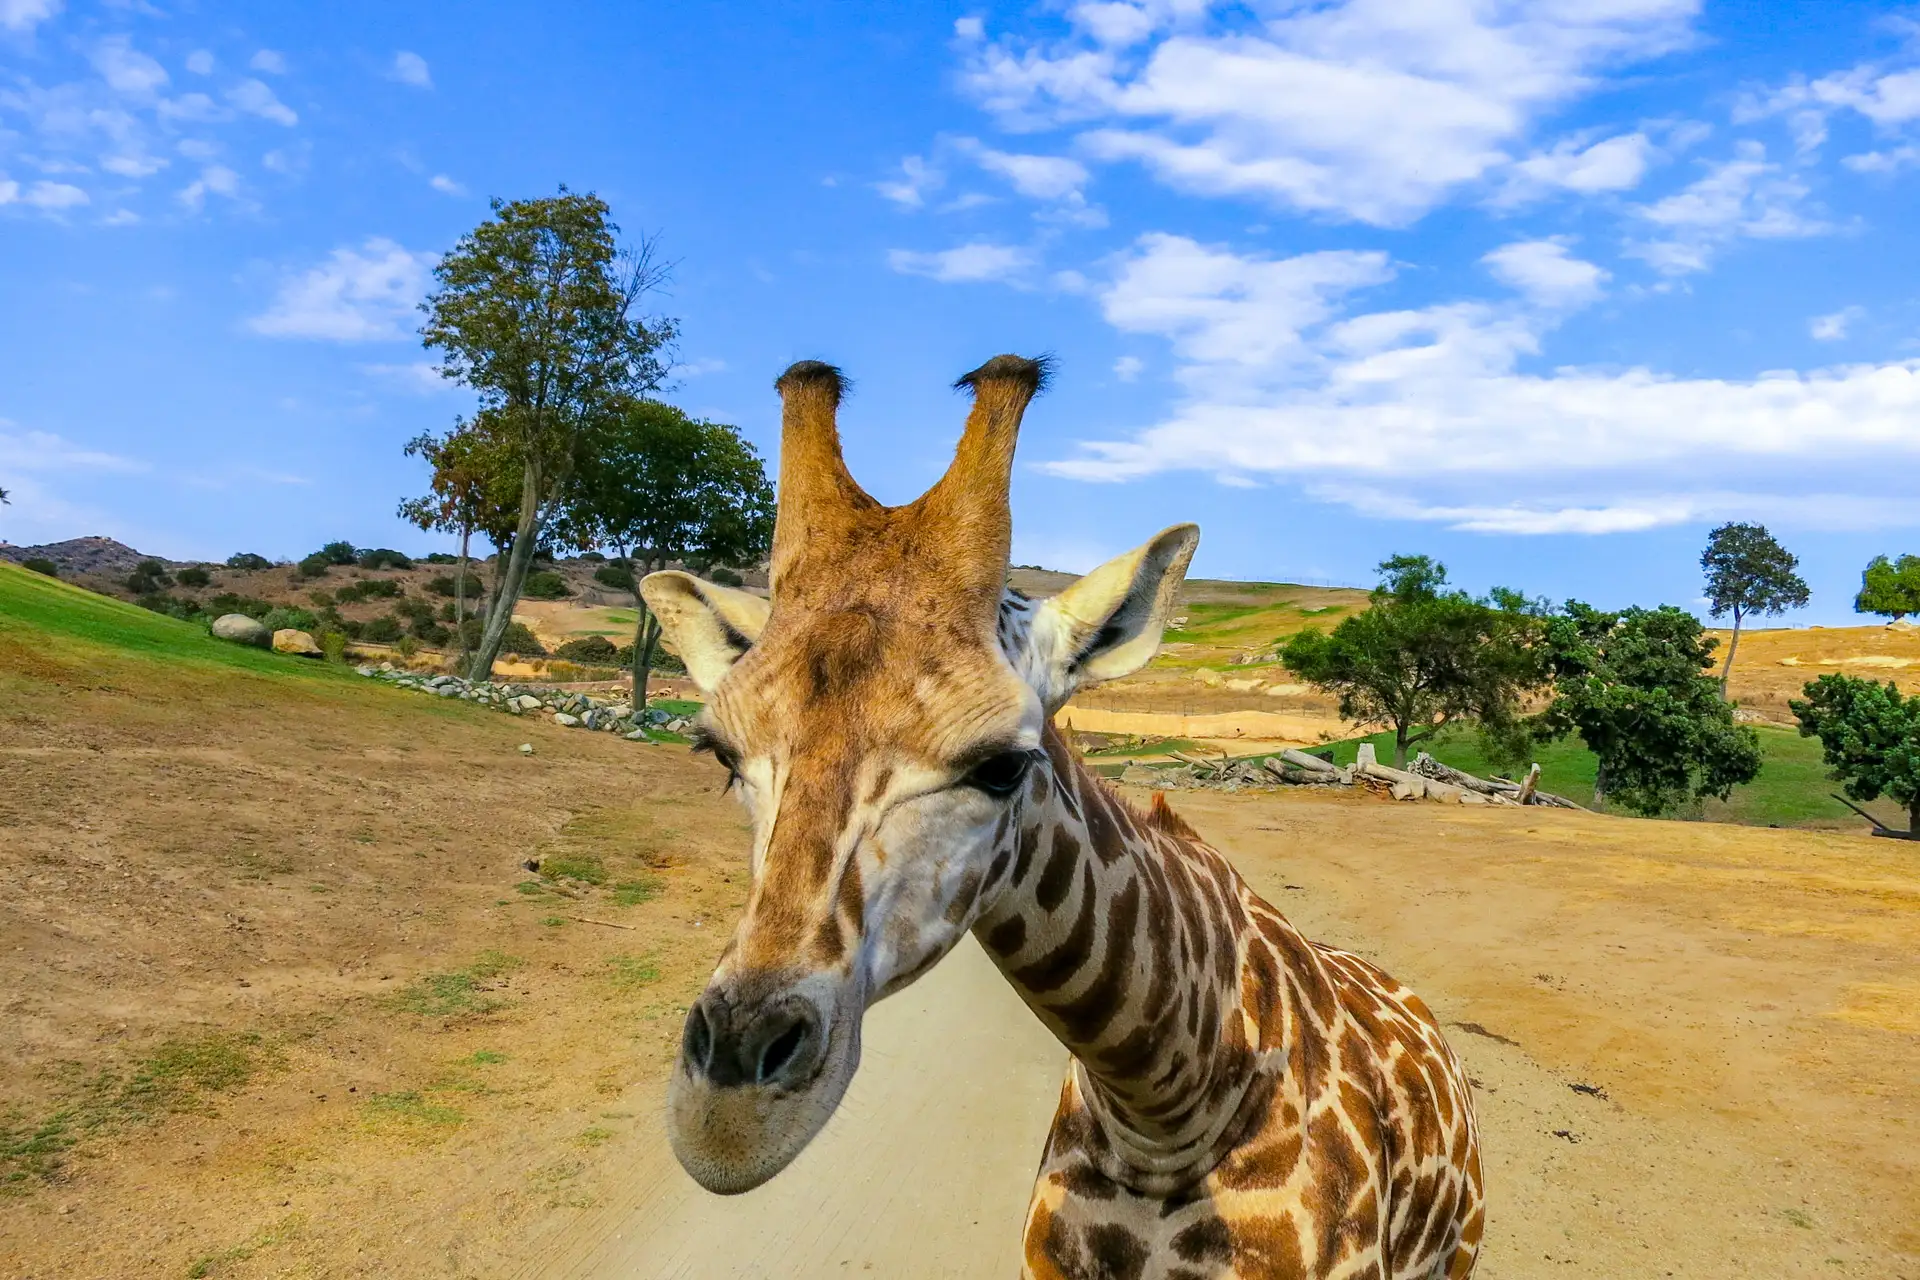 giraffe san diego zoo; Courtesy of Melanie Faulstick/Shutterstock.com